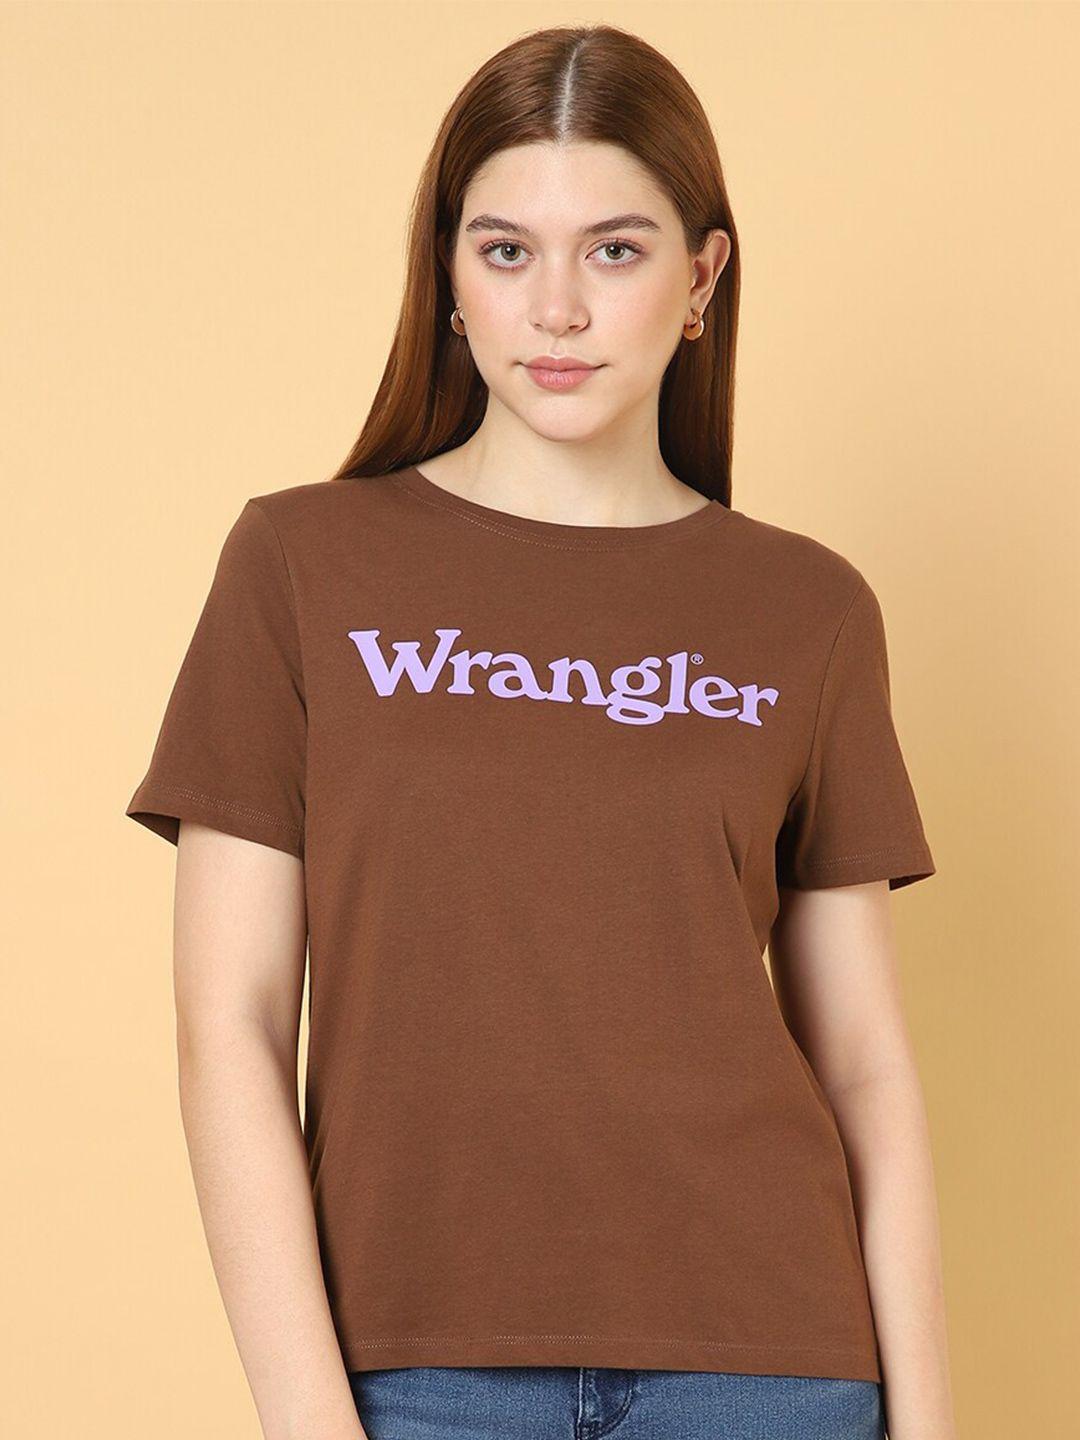 wrangler brown typography printed cotton t-shirt